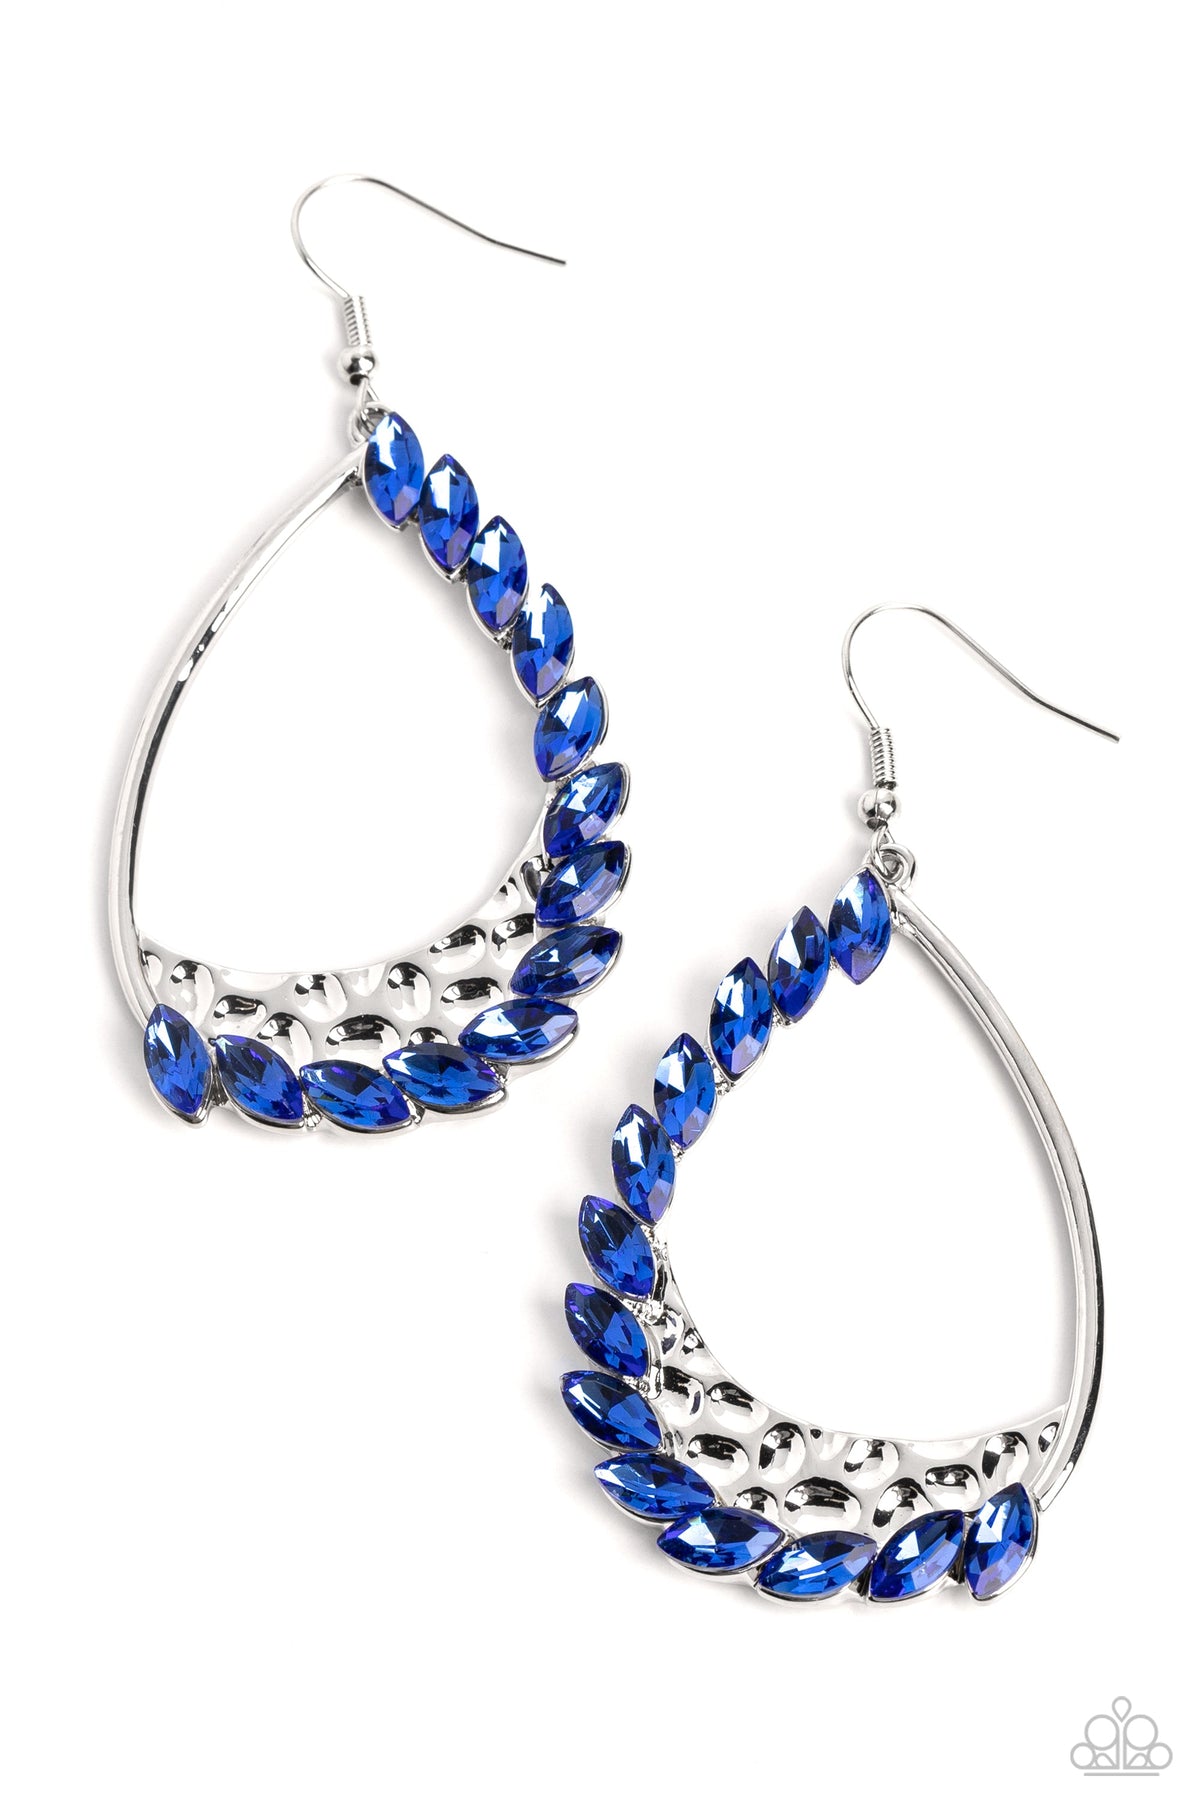 Looking Sharp Blue Rhinestone Earrings - Paparazzi Accessories- lightbox - CarasShop.com - $5 Jewelry by Cara Jewels